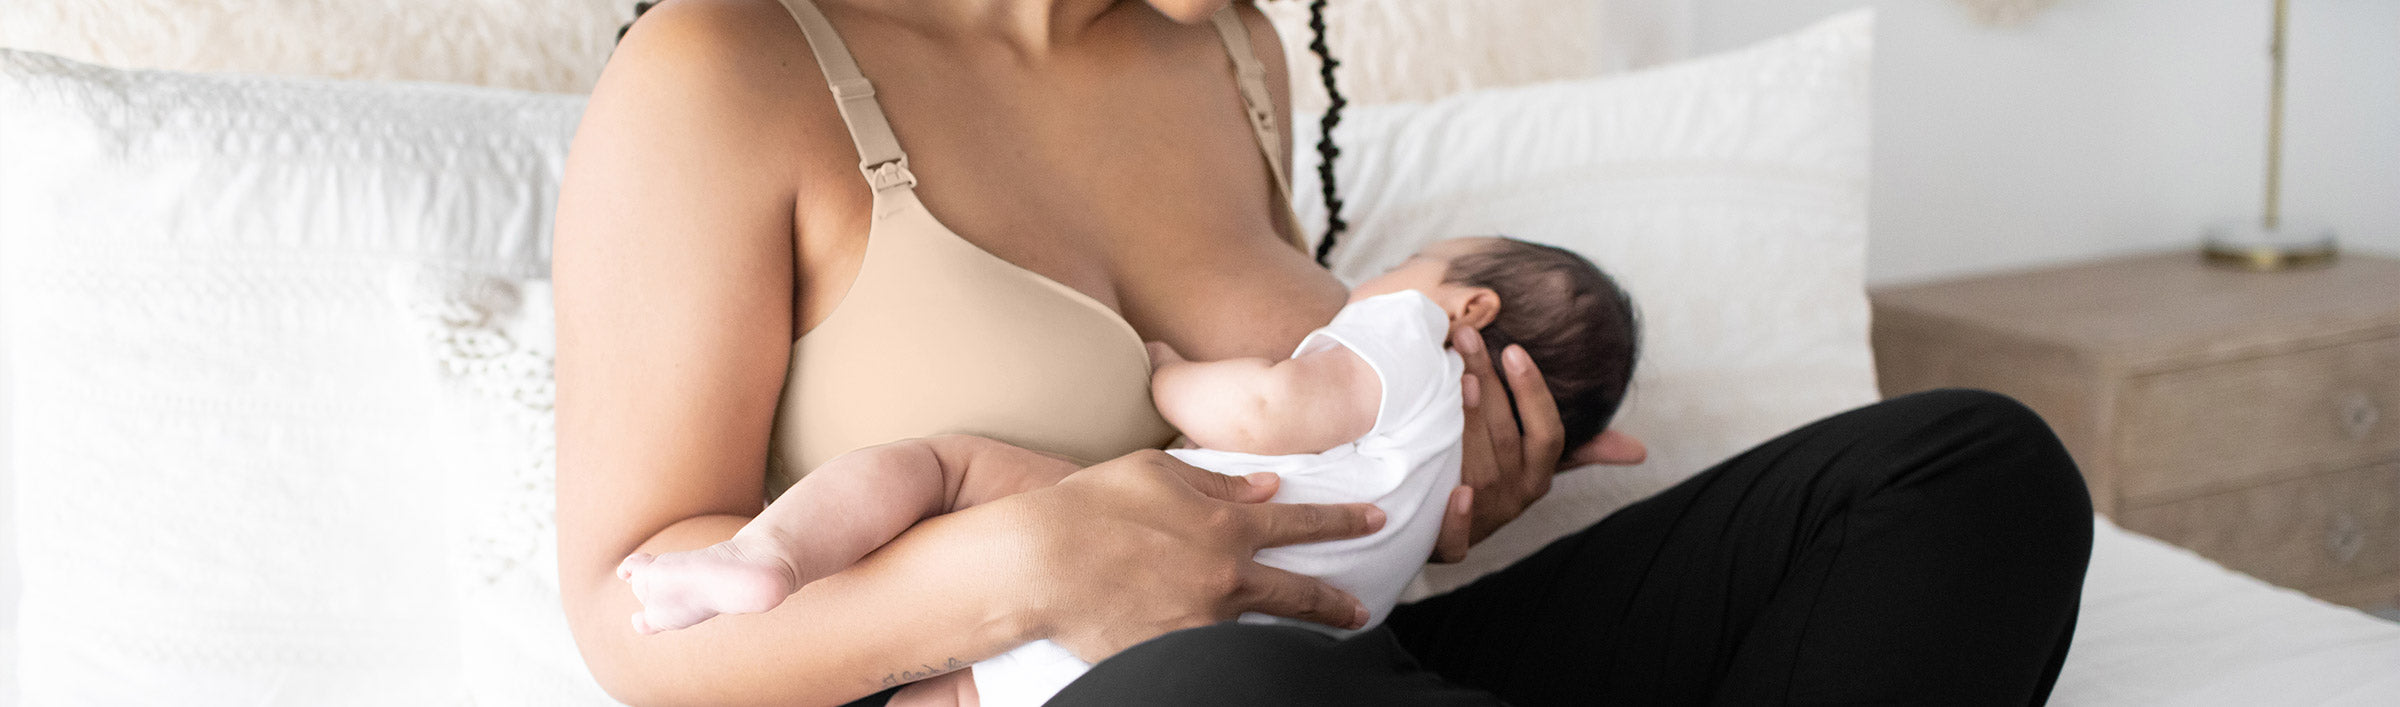 4 Nursing Bras Every Breastfeeding Mom Needs – Bra Fittings by Court